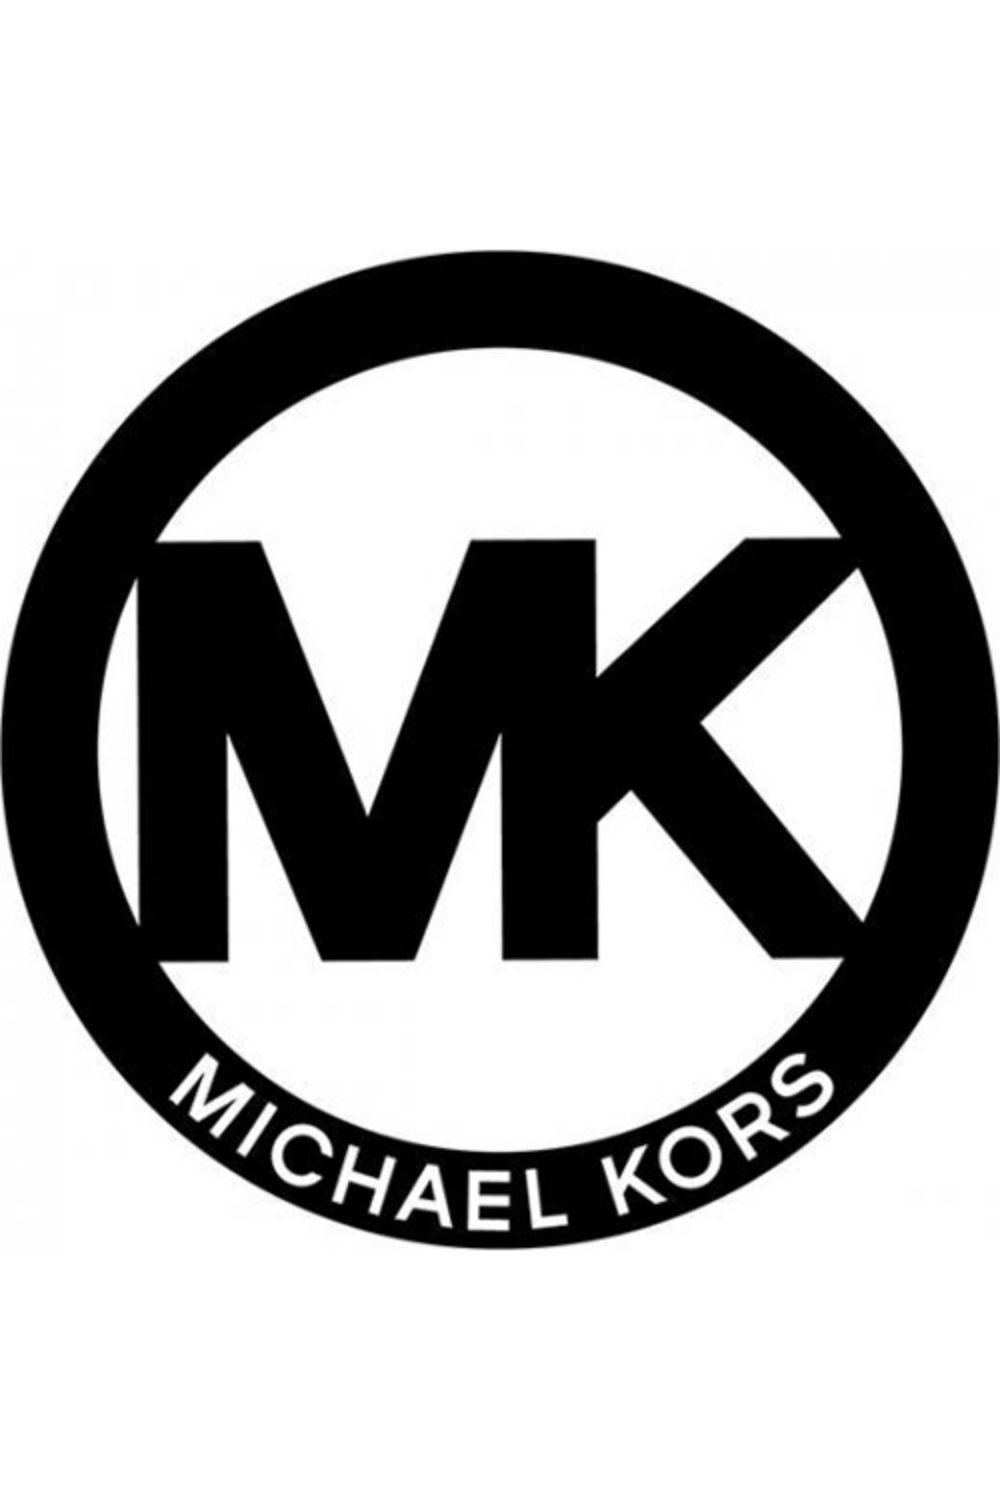 Michael Kors Logo Wallpapers - Top Free Michael Kors Logo Backgrounds ...